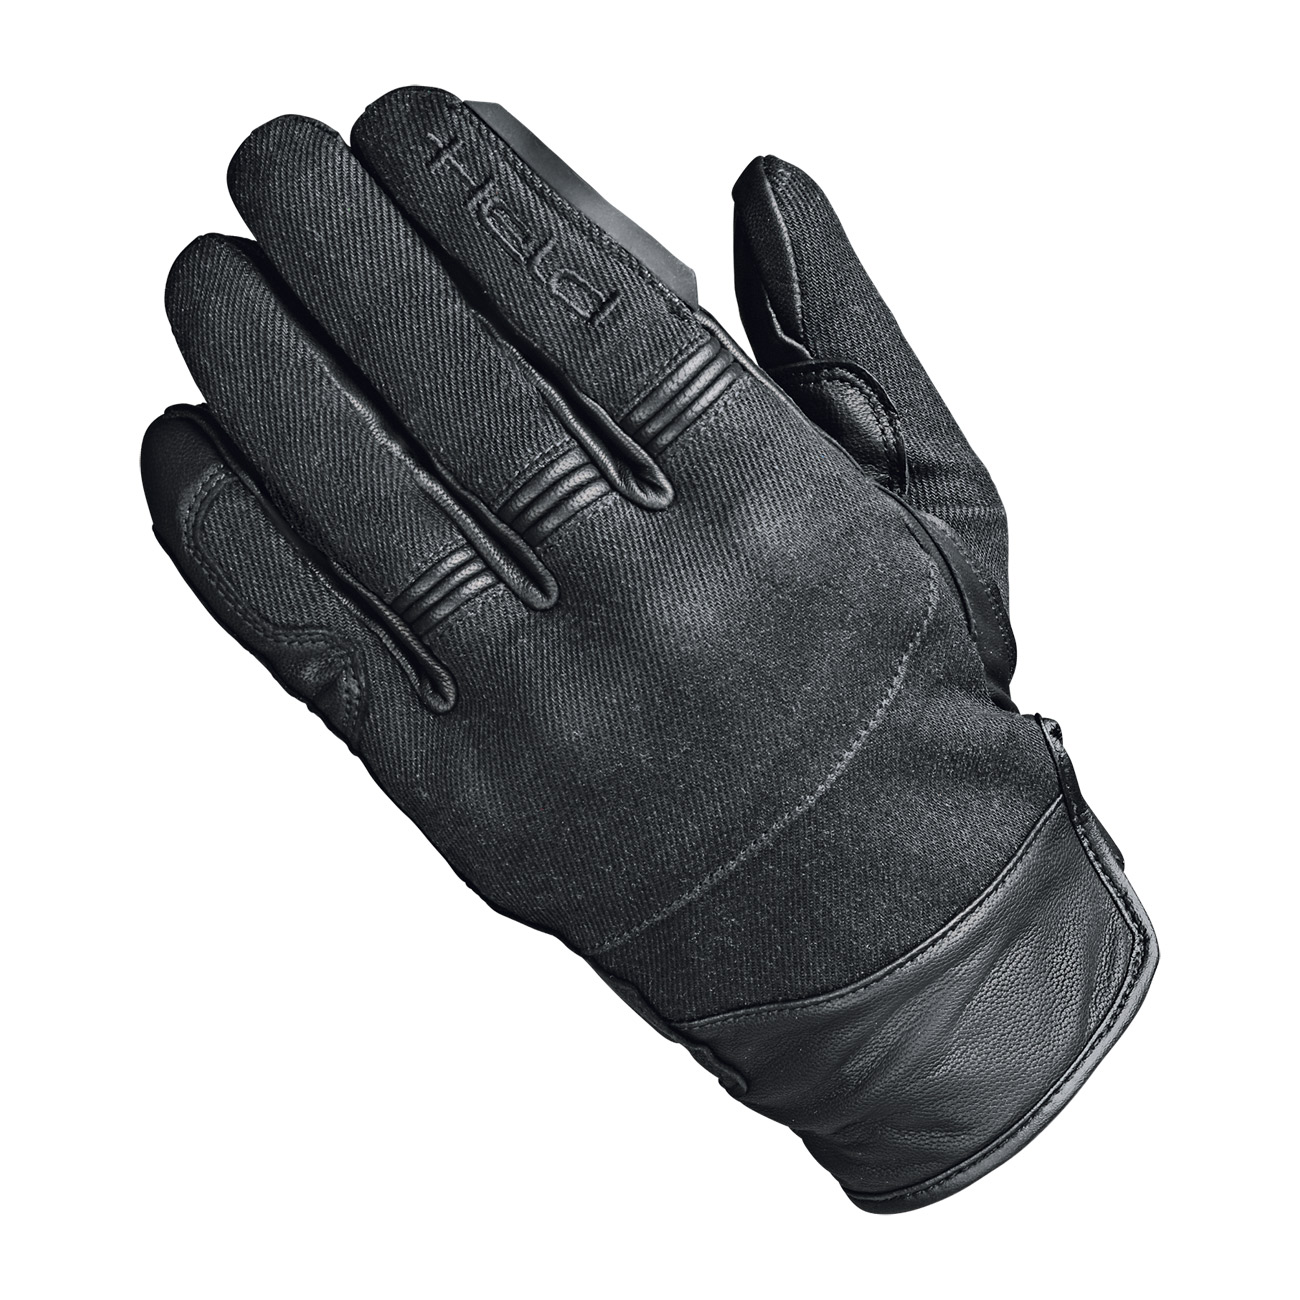 Southfield Urban glove